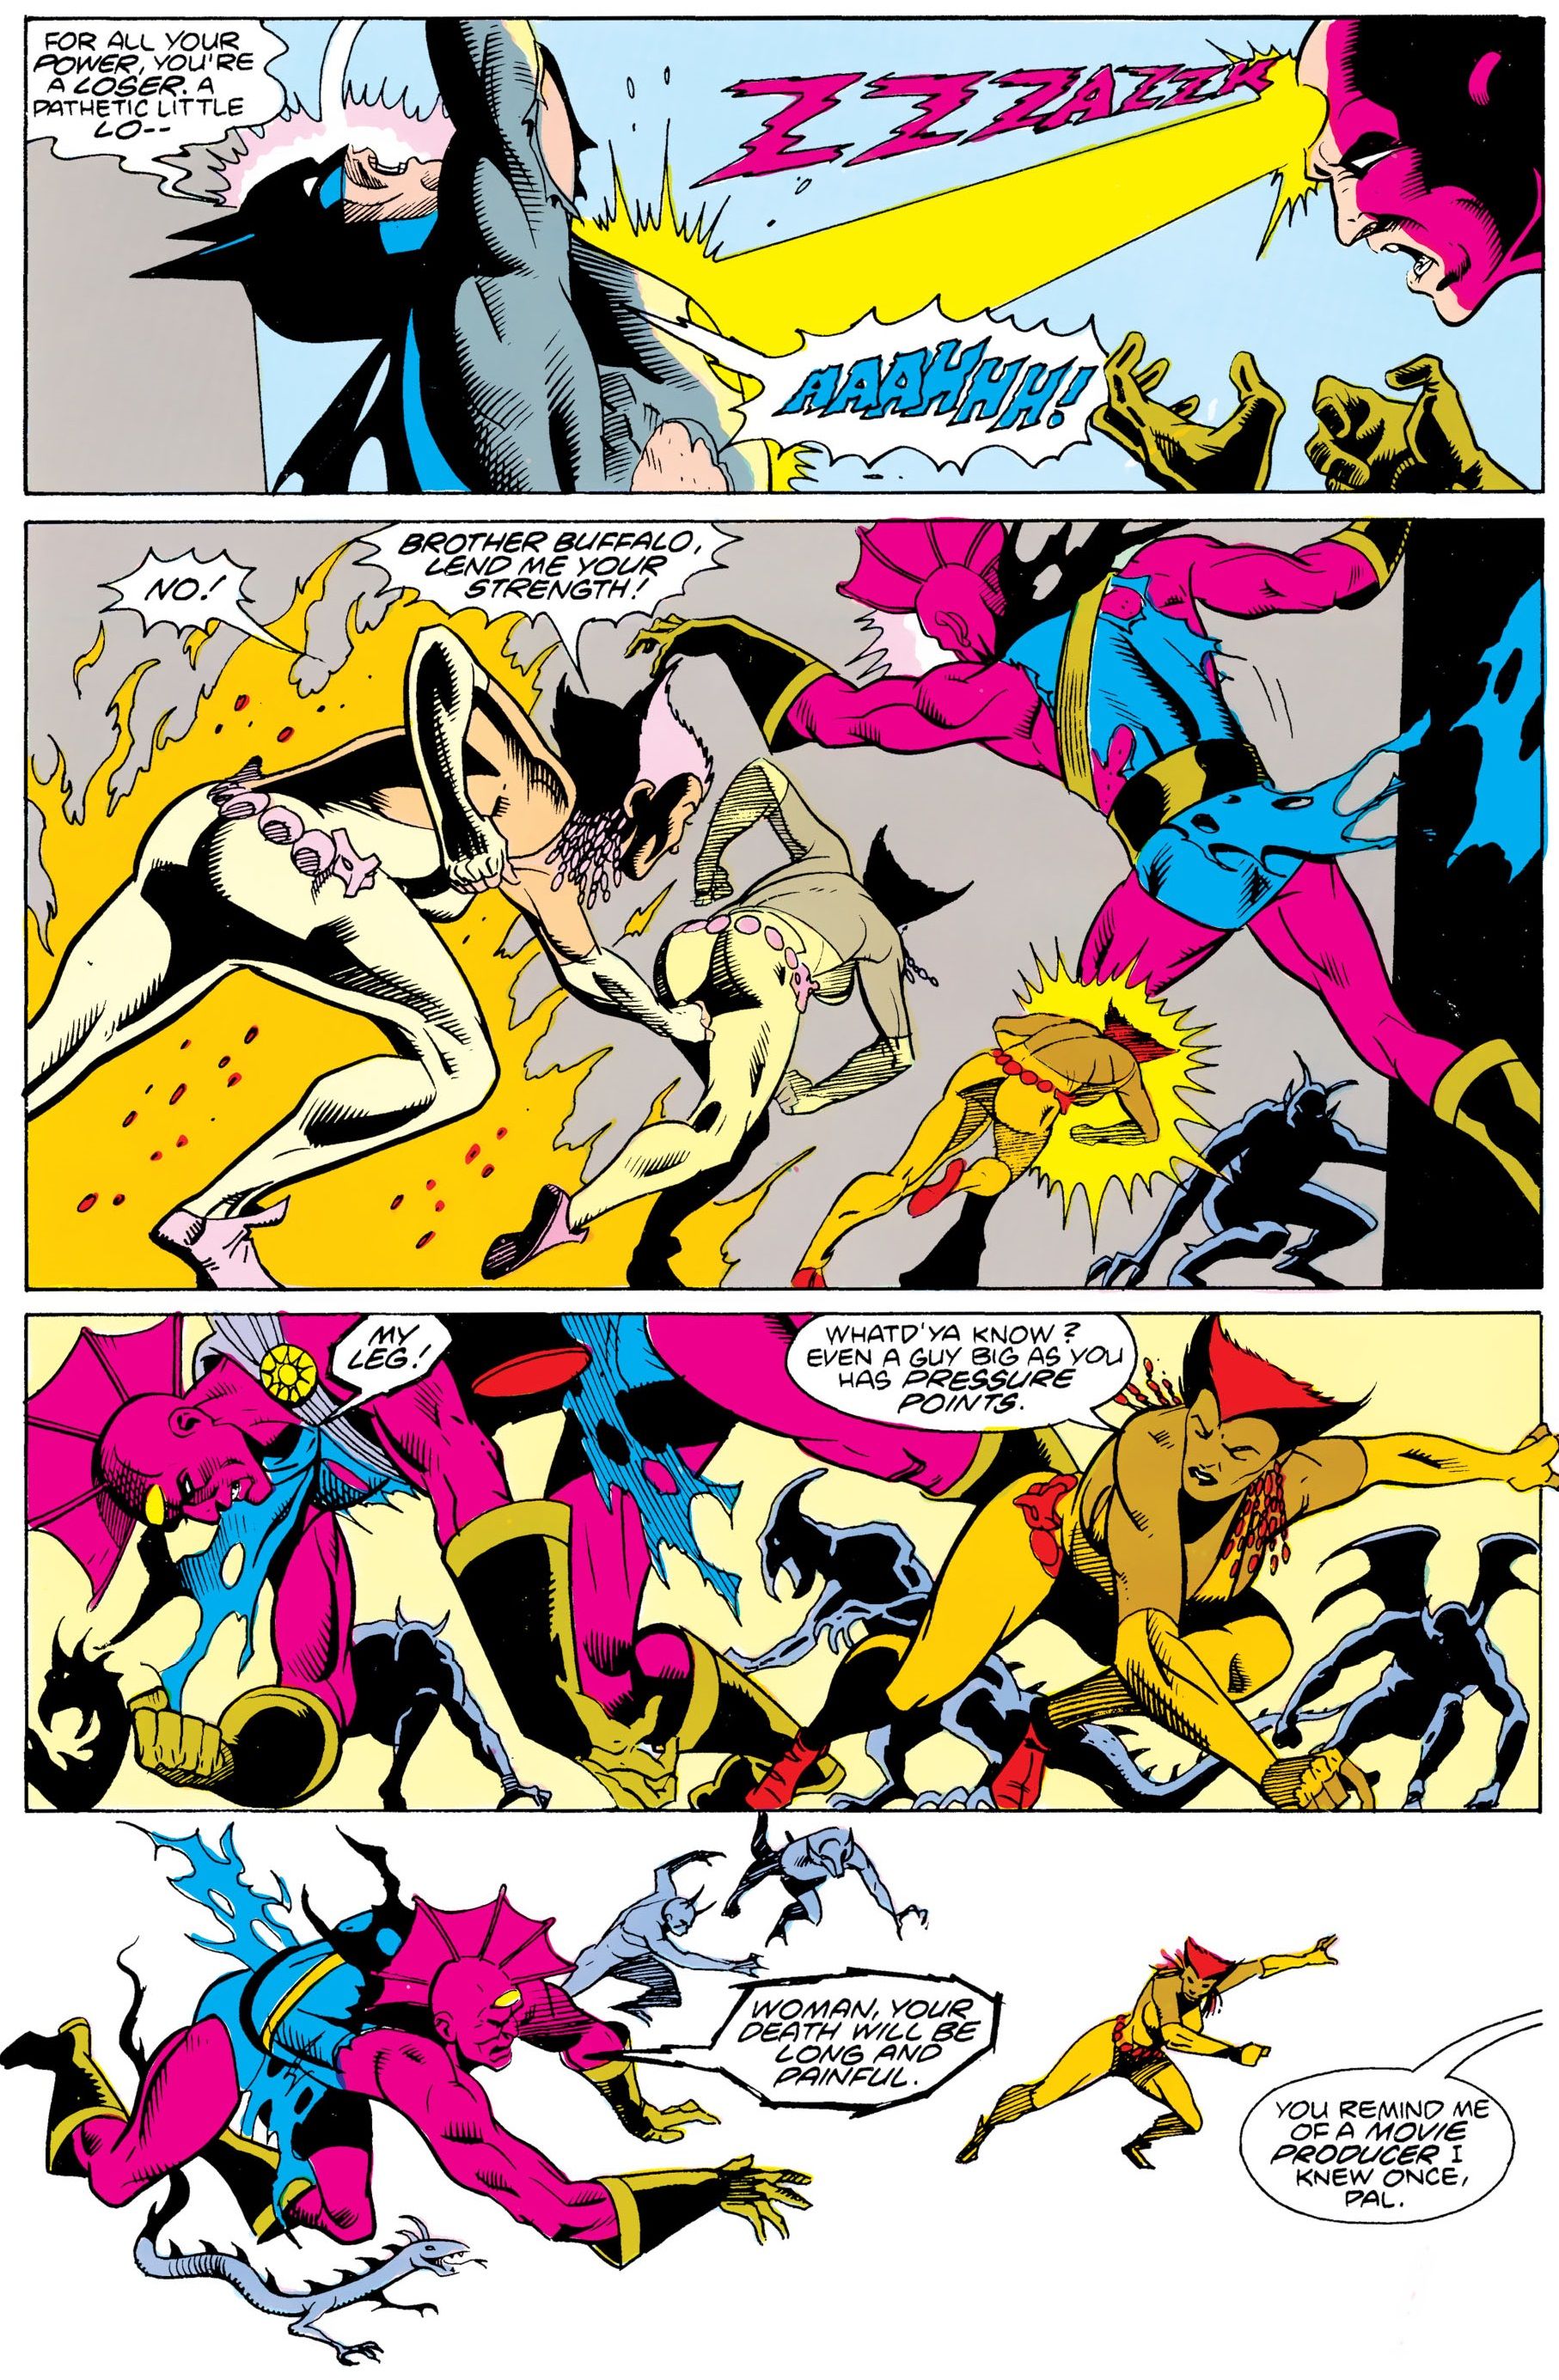 Batman mocks Despero, while Vixen arrives to help